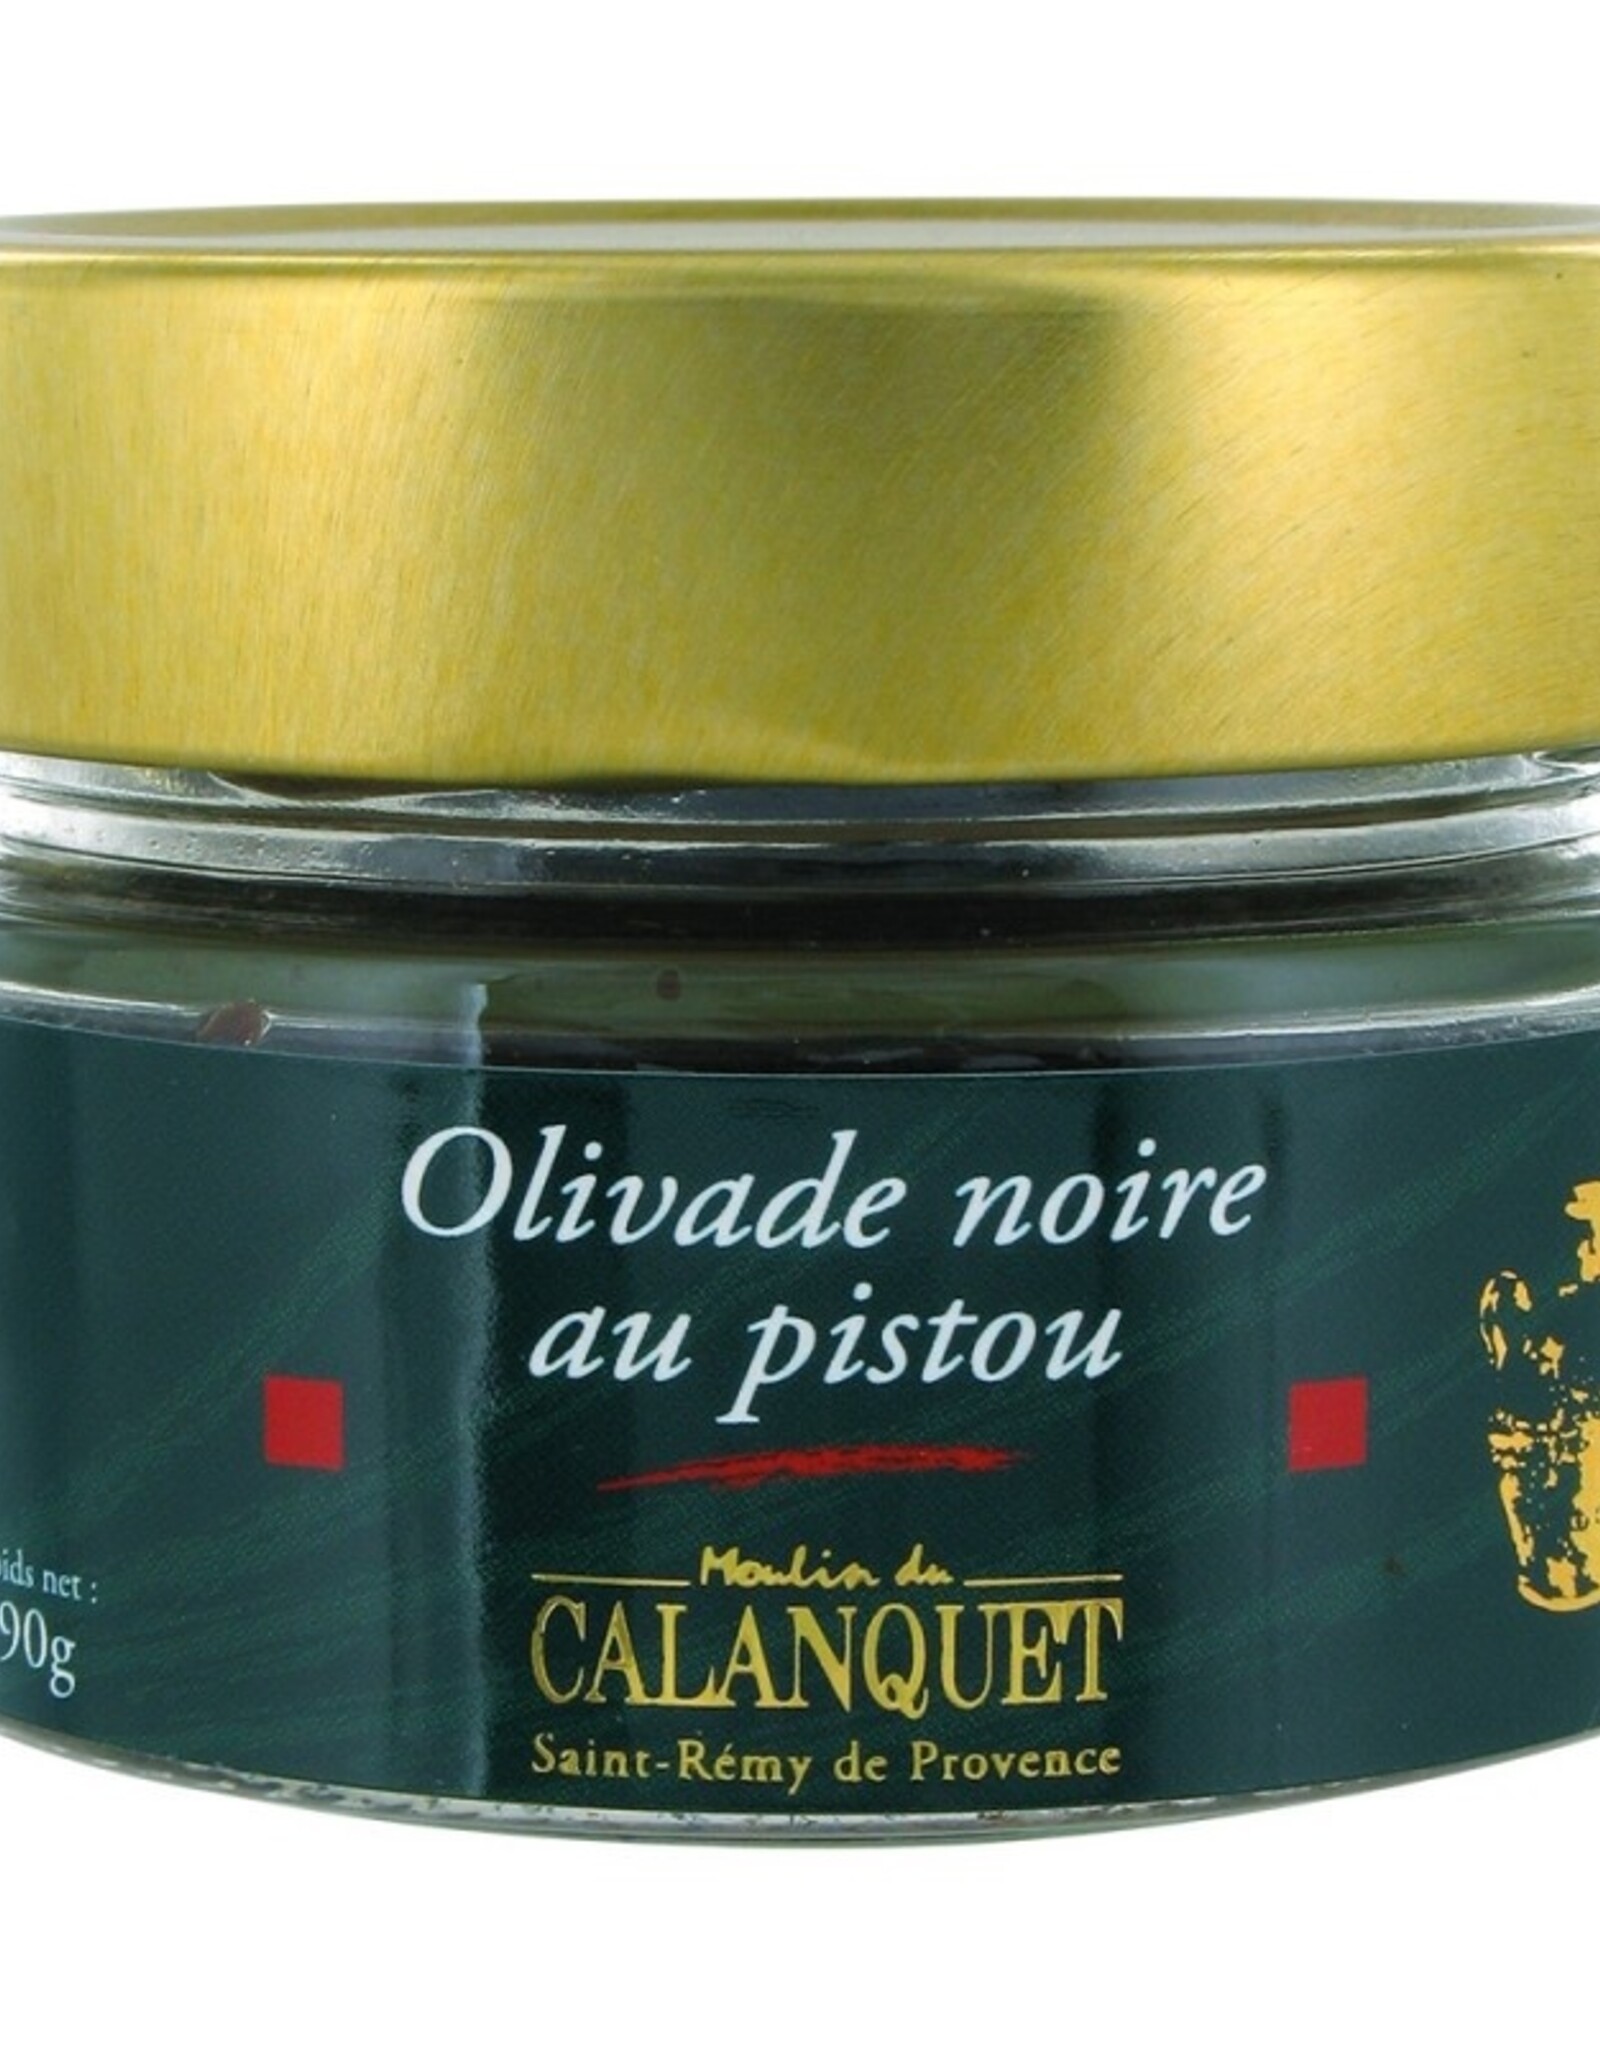 Moulin du Calanquet Olivade noire au pistou / Black Olivade with Pesto 90 g